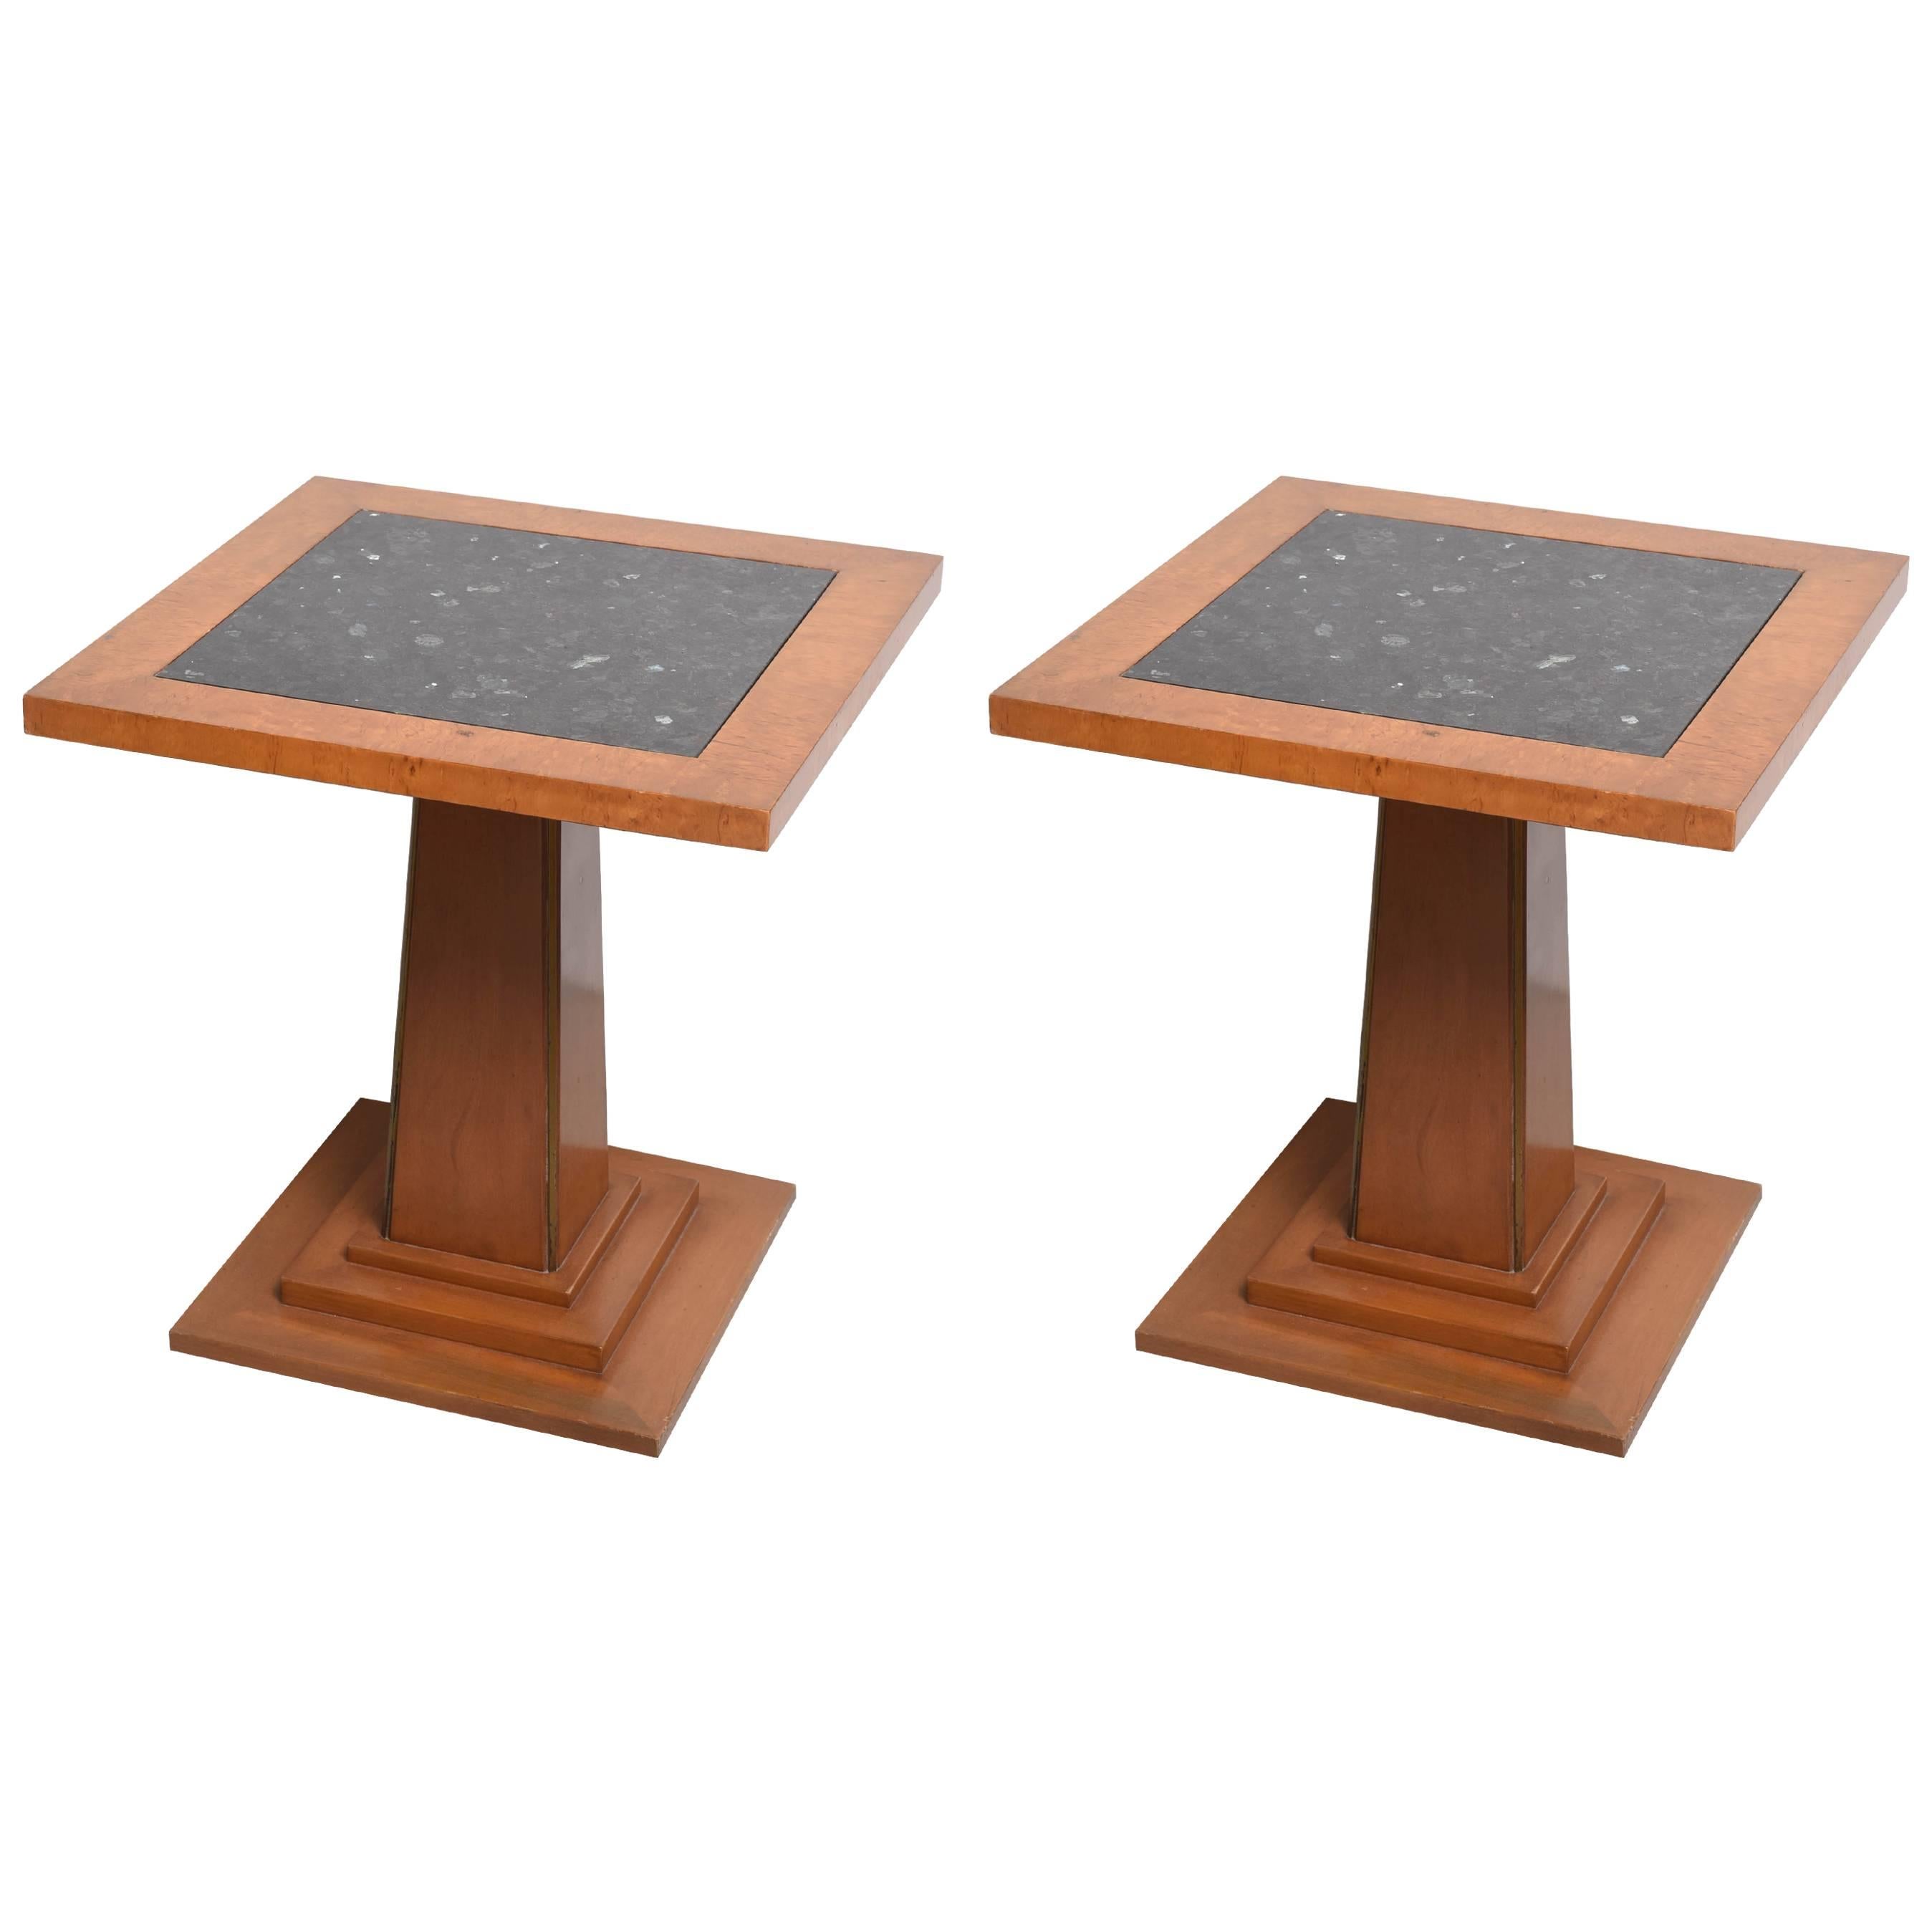 SALE!SALE!SALE!   PR/Deco Side Tables, Original Condition, stunning, elegant  For Sale